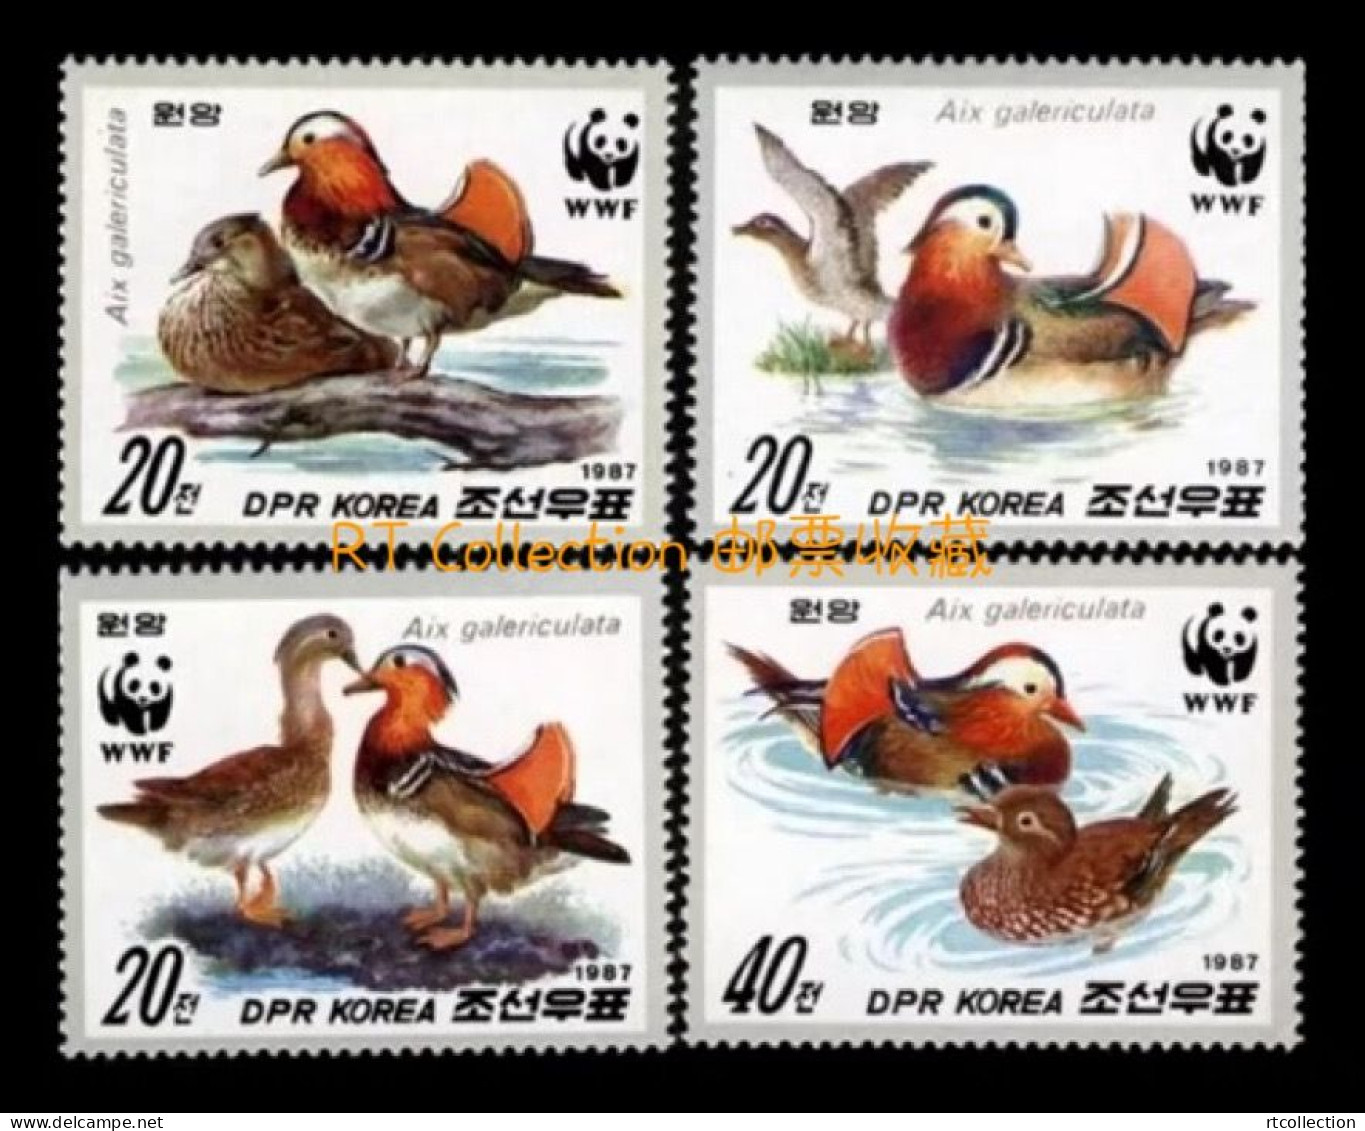 Korea 1987 World Nature Conservation Mandarin Ducks Duck WWF Fauna Animals Organizations W.W.F. Nature Stamps MNH - Ducks